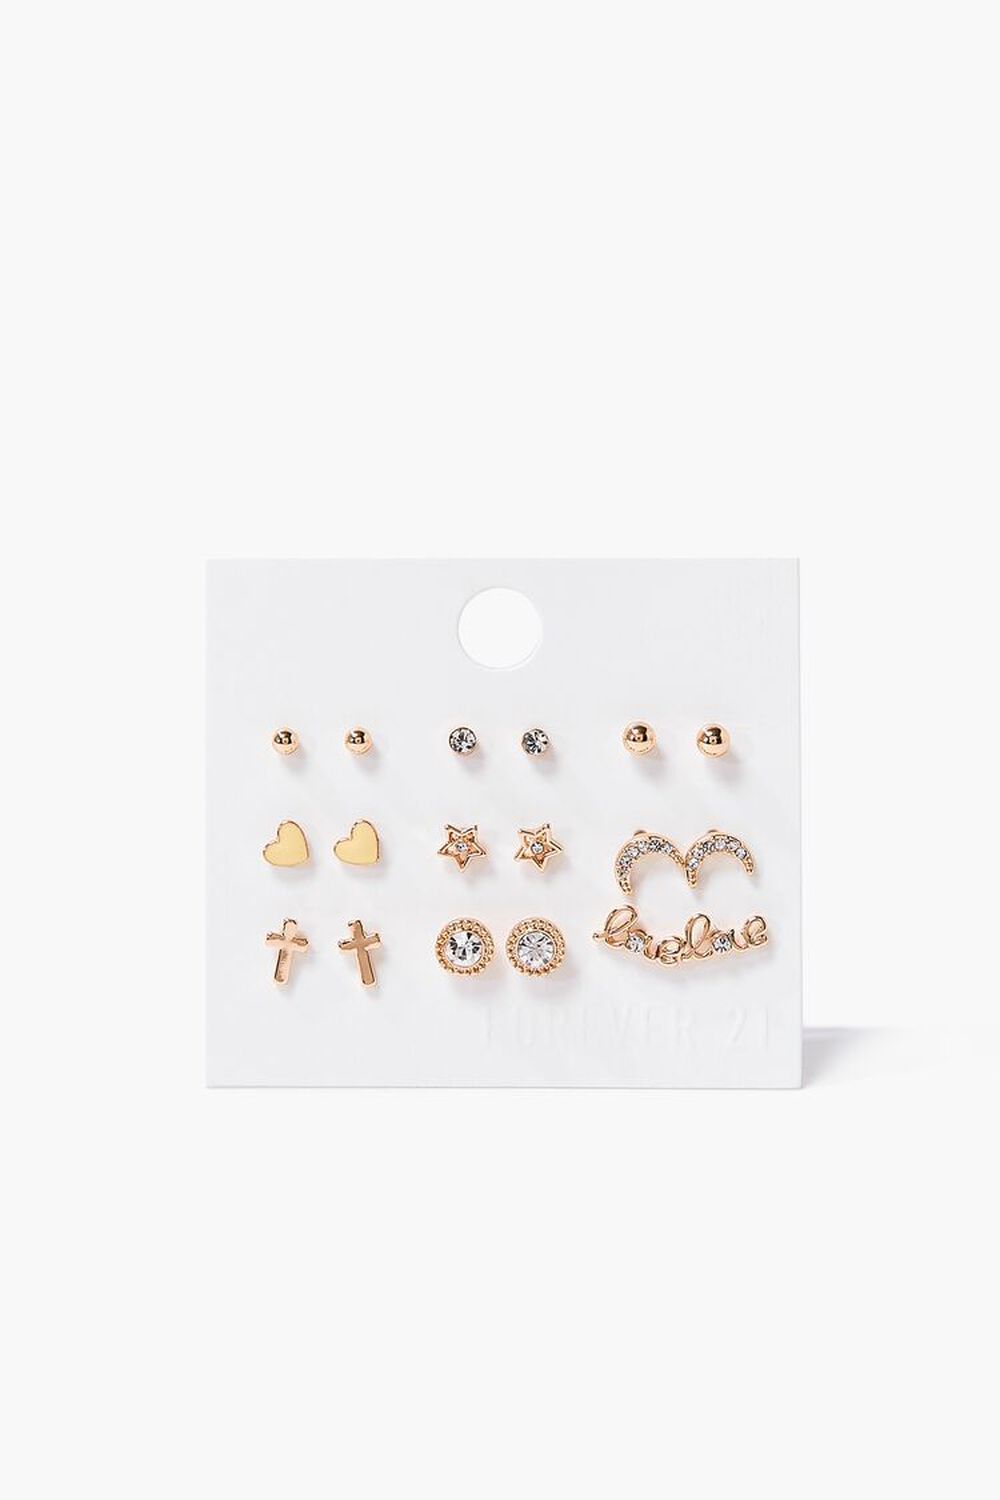 GOLD Heart Charm Variety Stud Earring Set, image 1